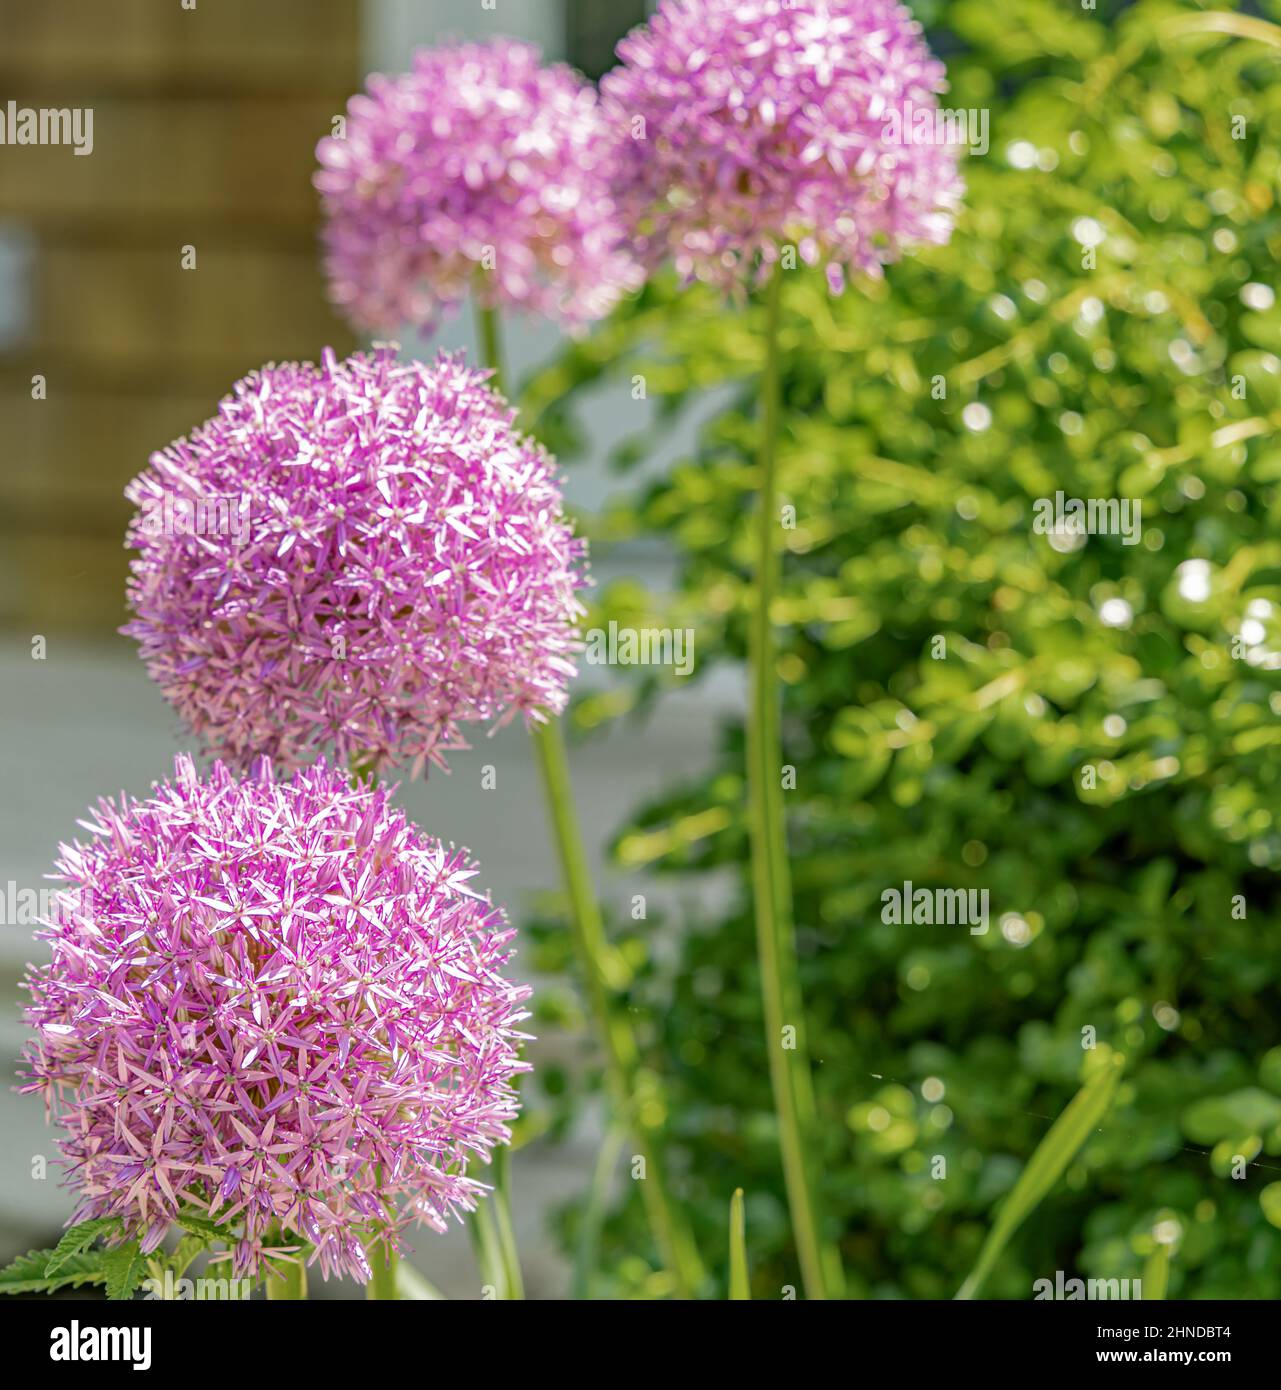 Four Gladiator Allium flowers Stock Photo